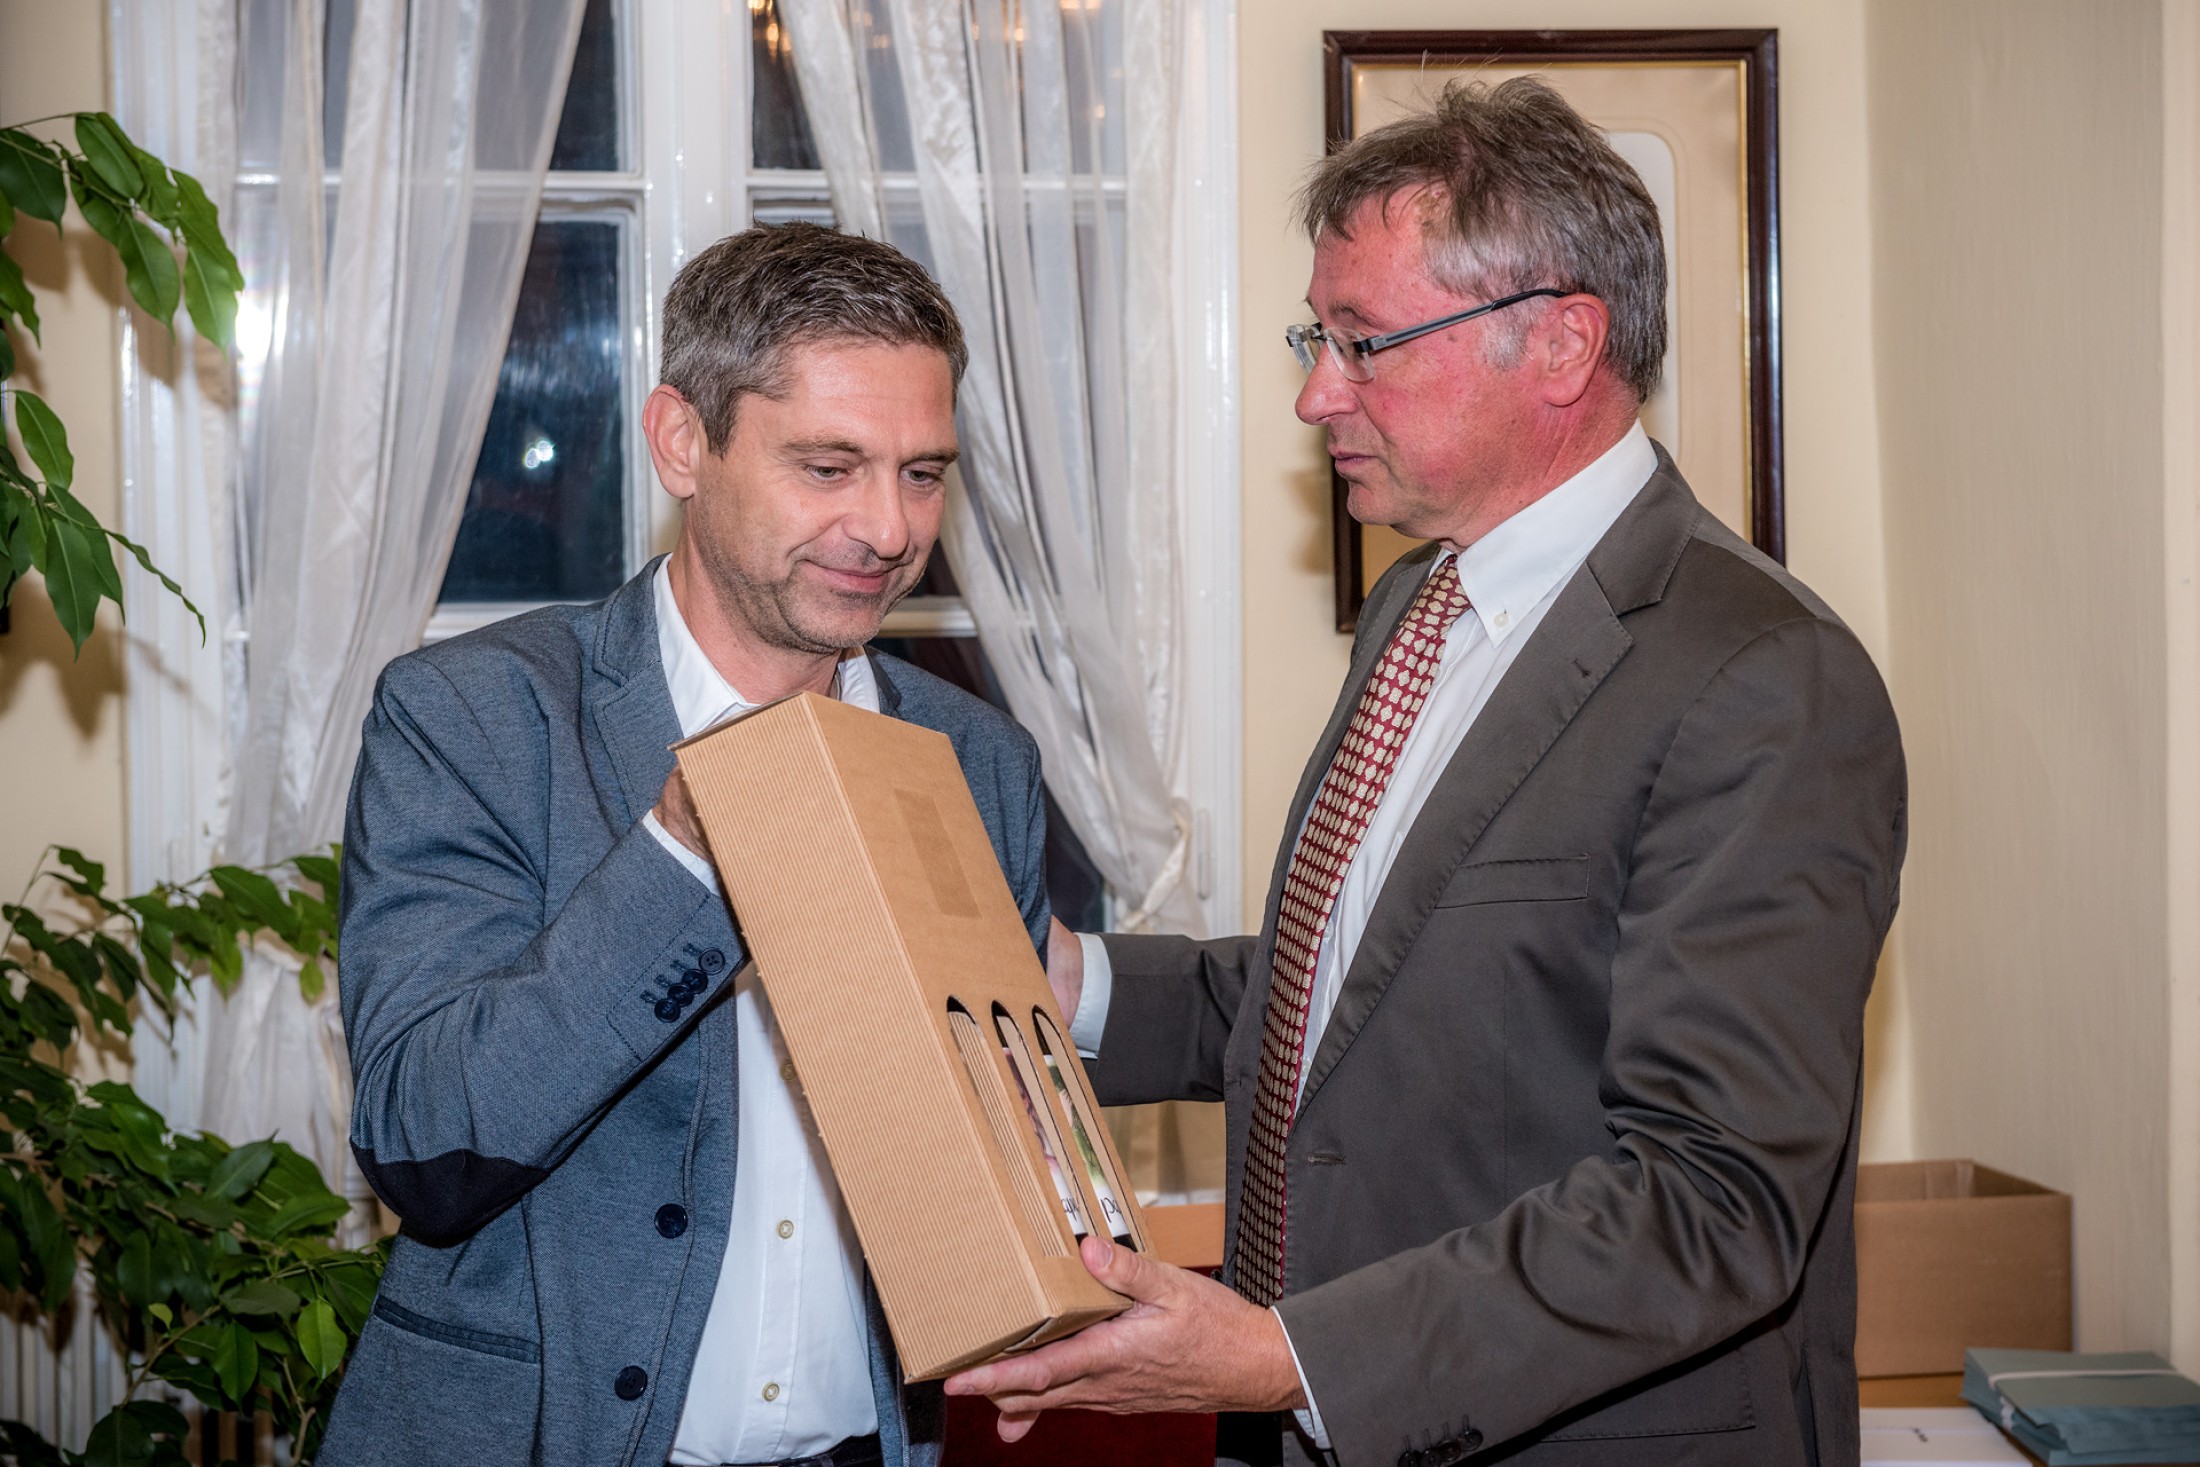 Bürgermeister Ing. Martin Falk gratuliert dem neuen Gemeinderat Günther Wieland